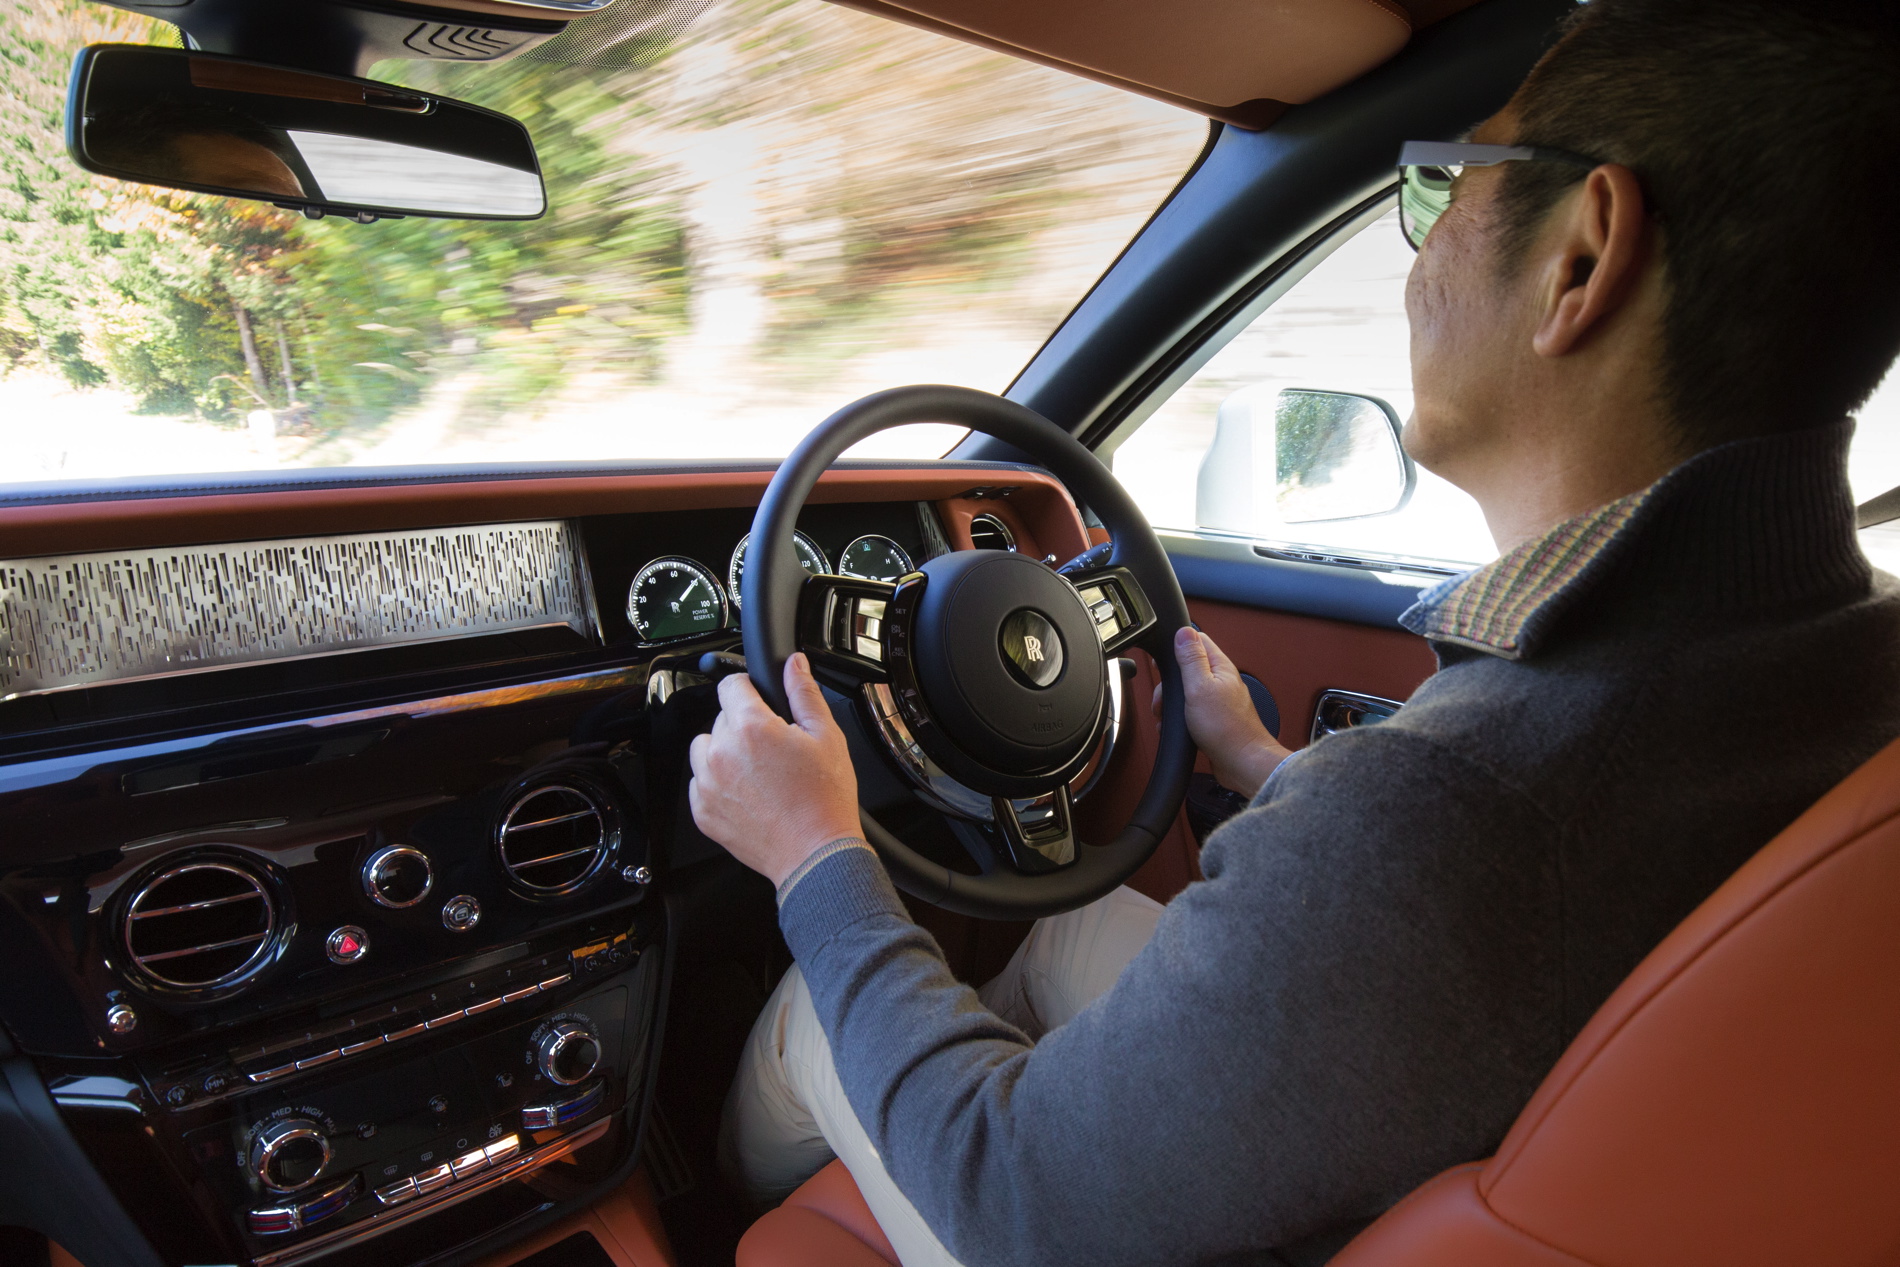 Tải xuống APK Drive Rolls Royce Luxury  Sim Elite Car 2019 cho Android